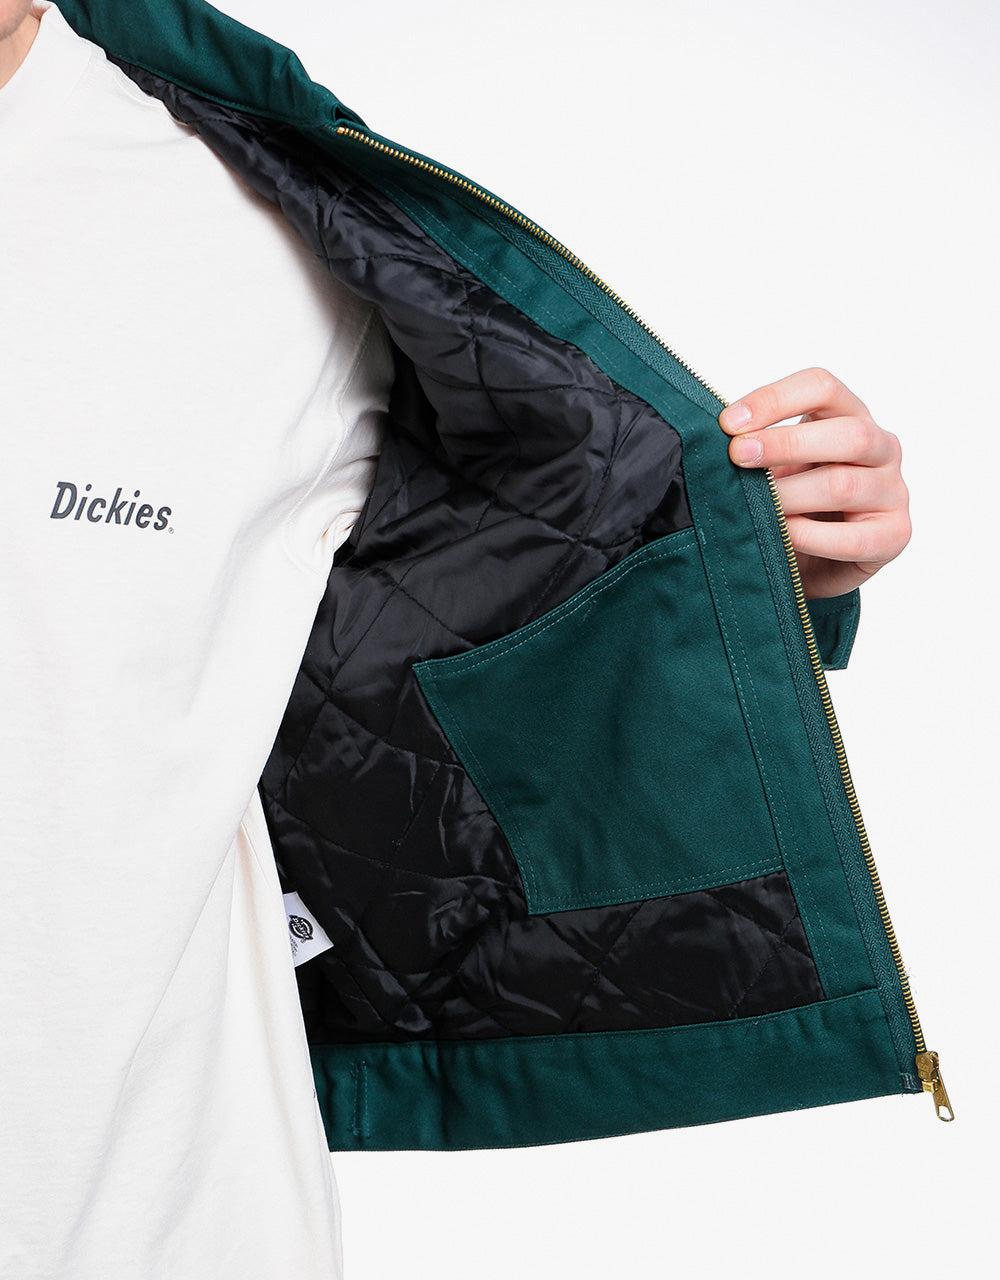 Dickies Lined Eisenhower Jacket - Ponderosa Pine